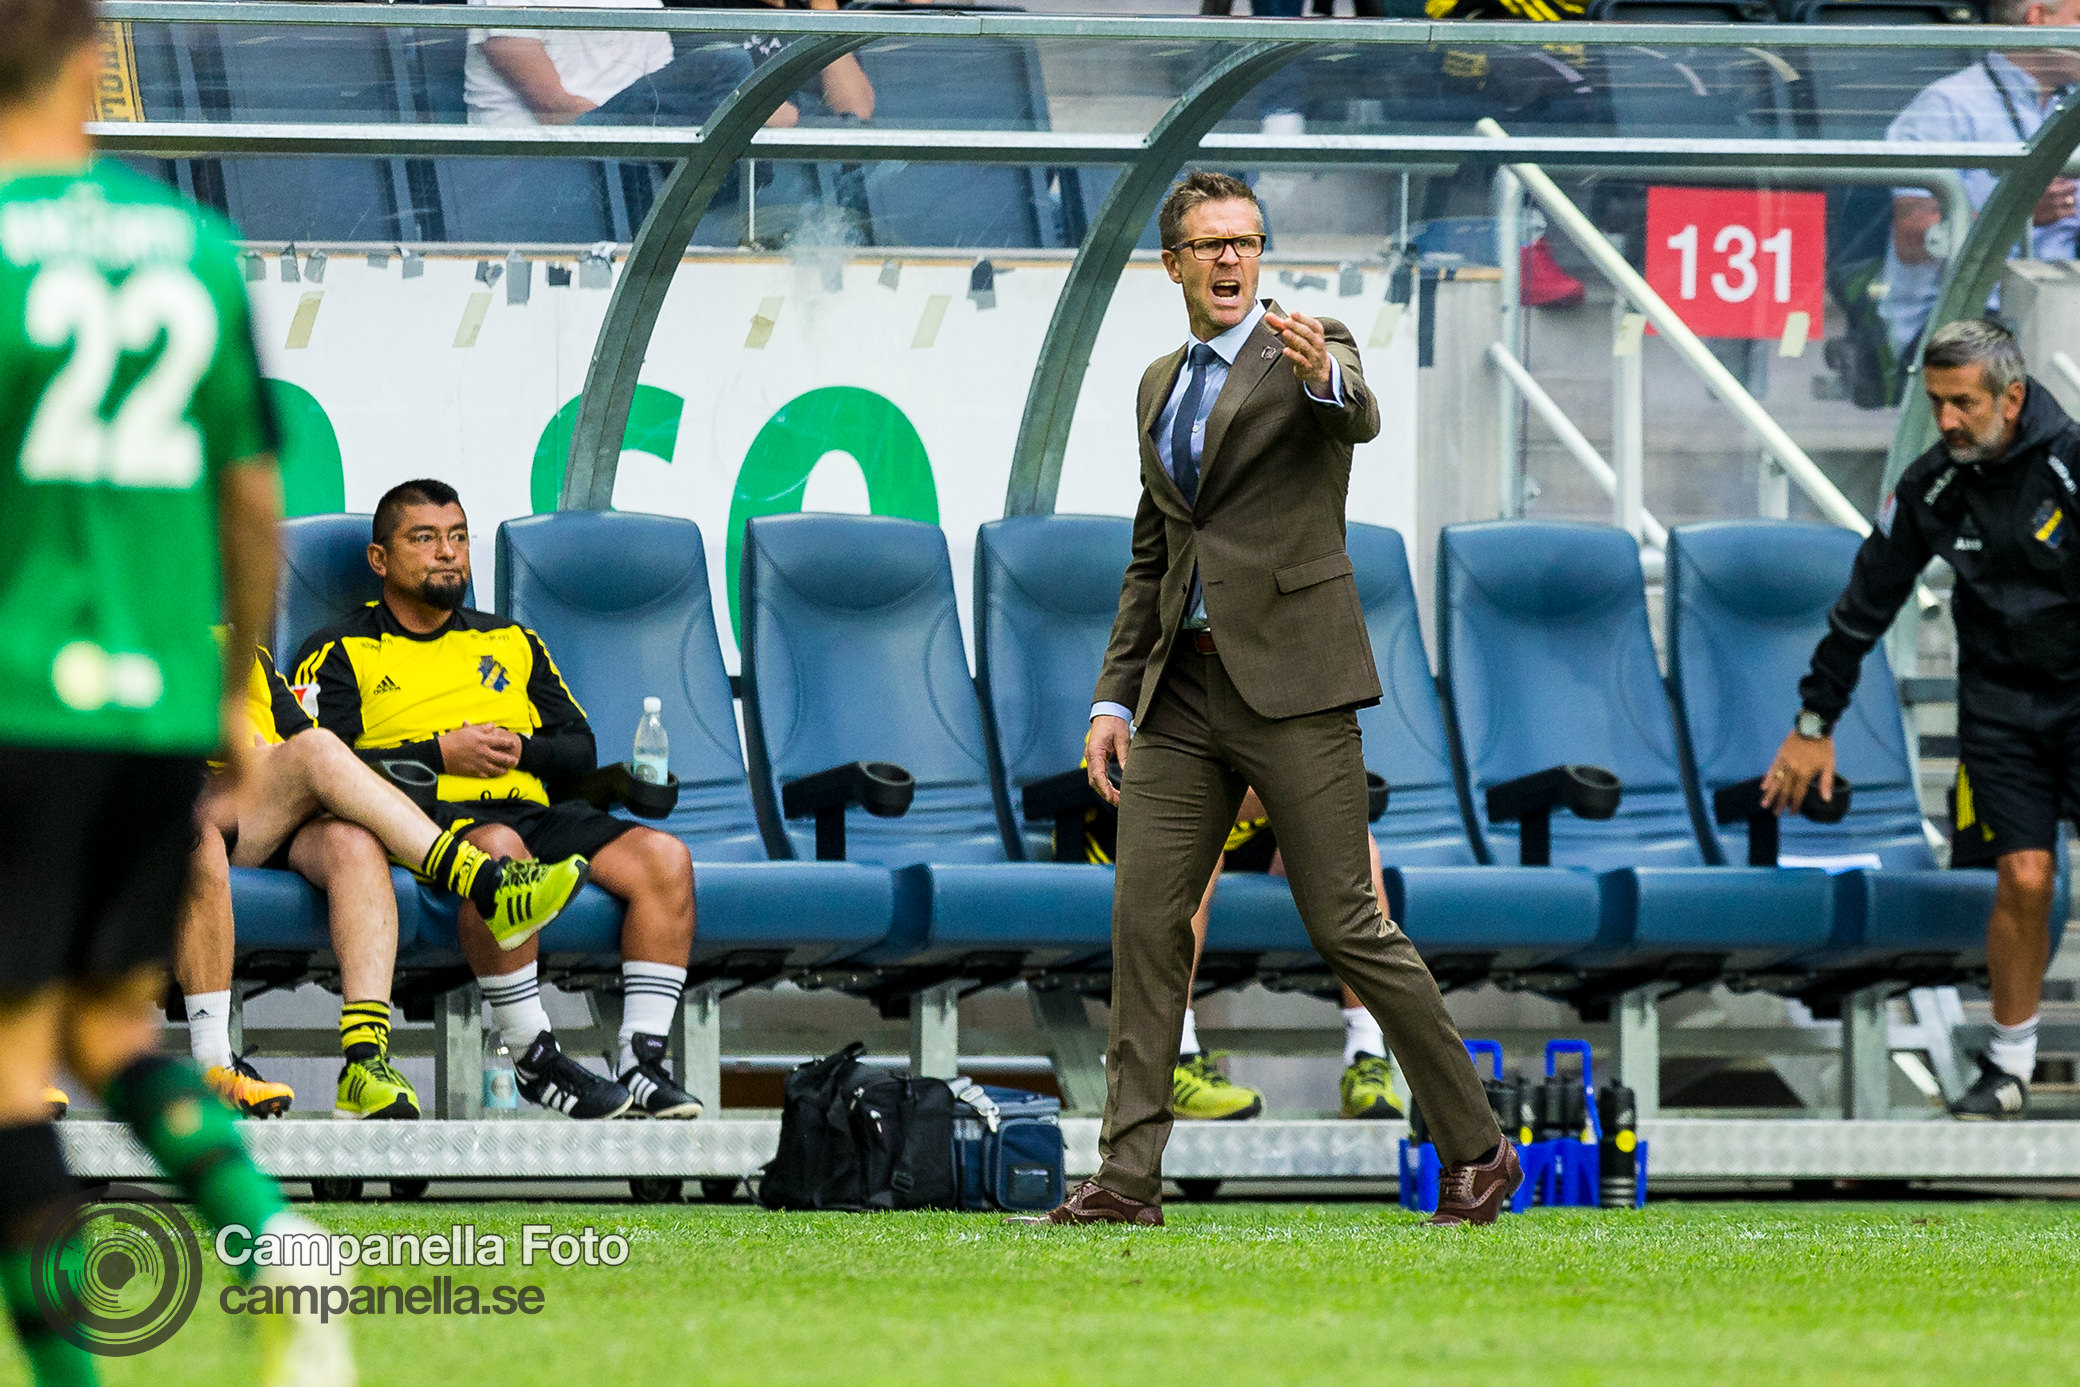 AIK scrapes past Europa FC - Michael Campanella Photography